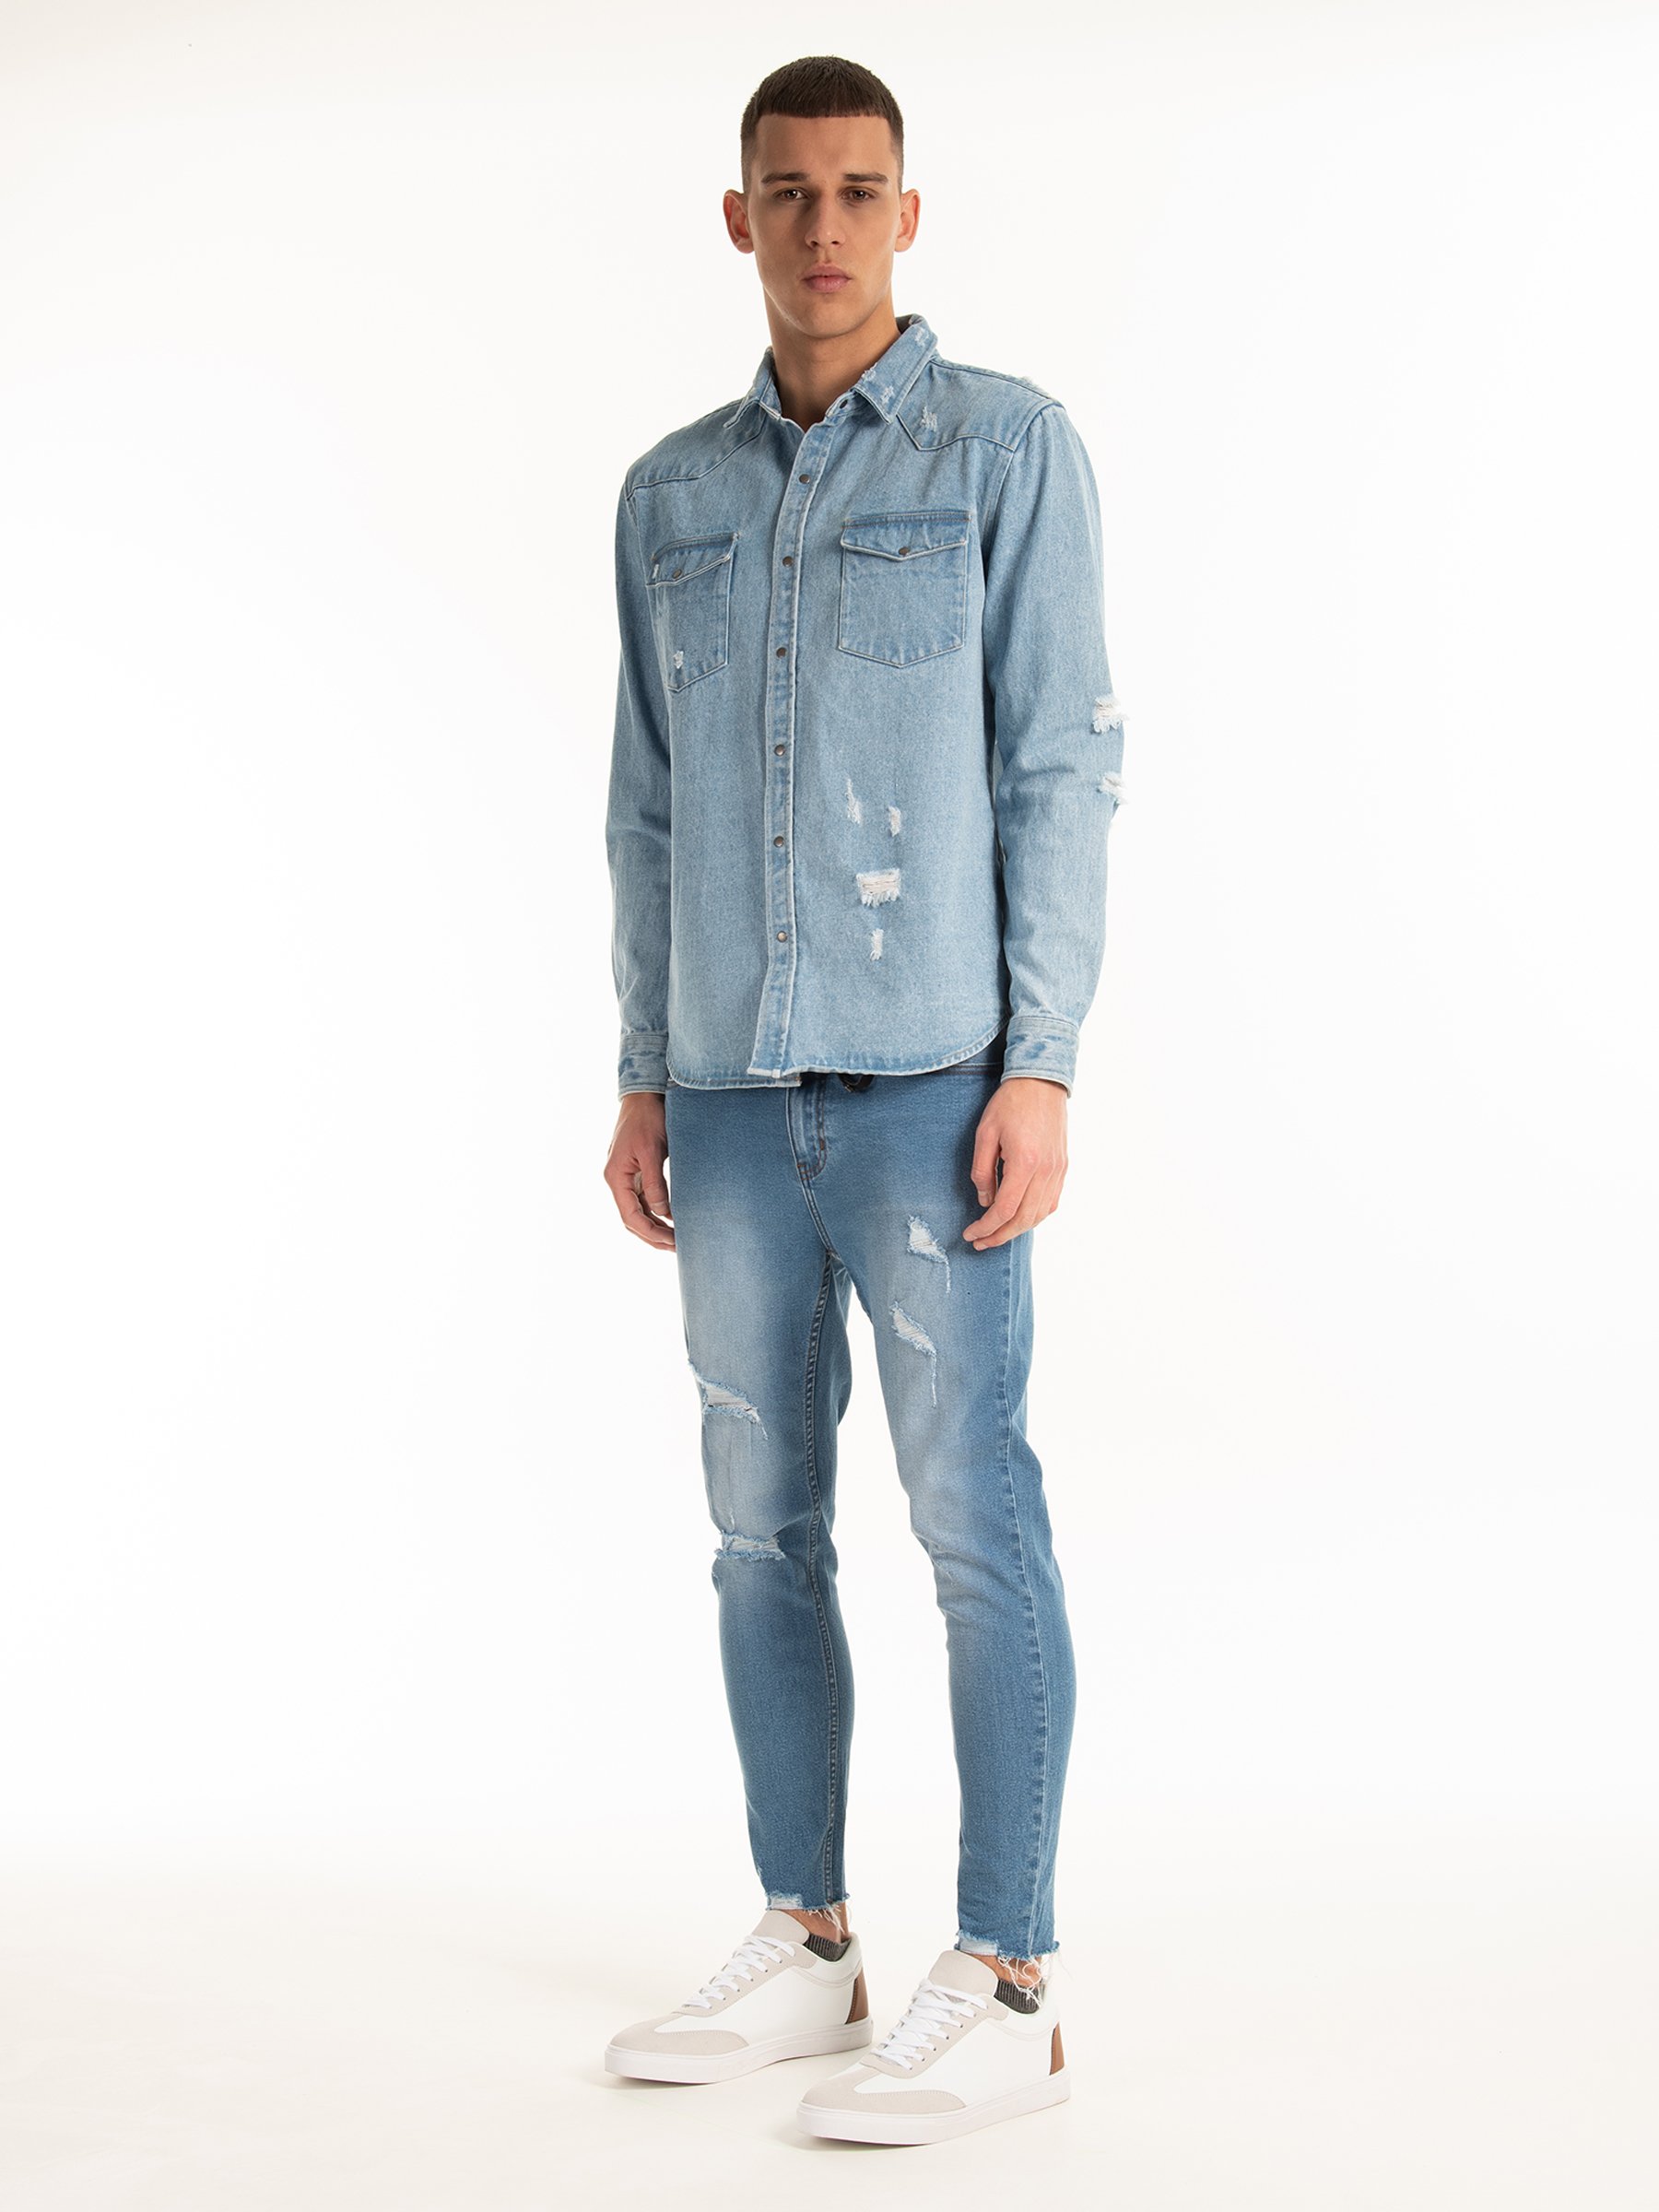 New Zara Ripped Denim Overshirt S Khaki shirt jacket coat denim jeans  western | eBay